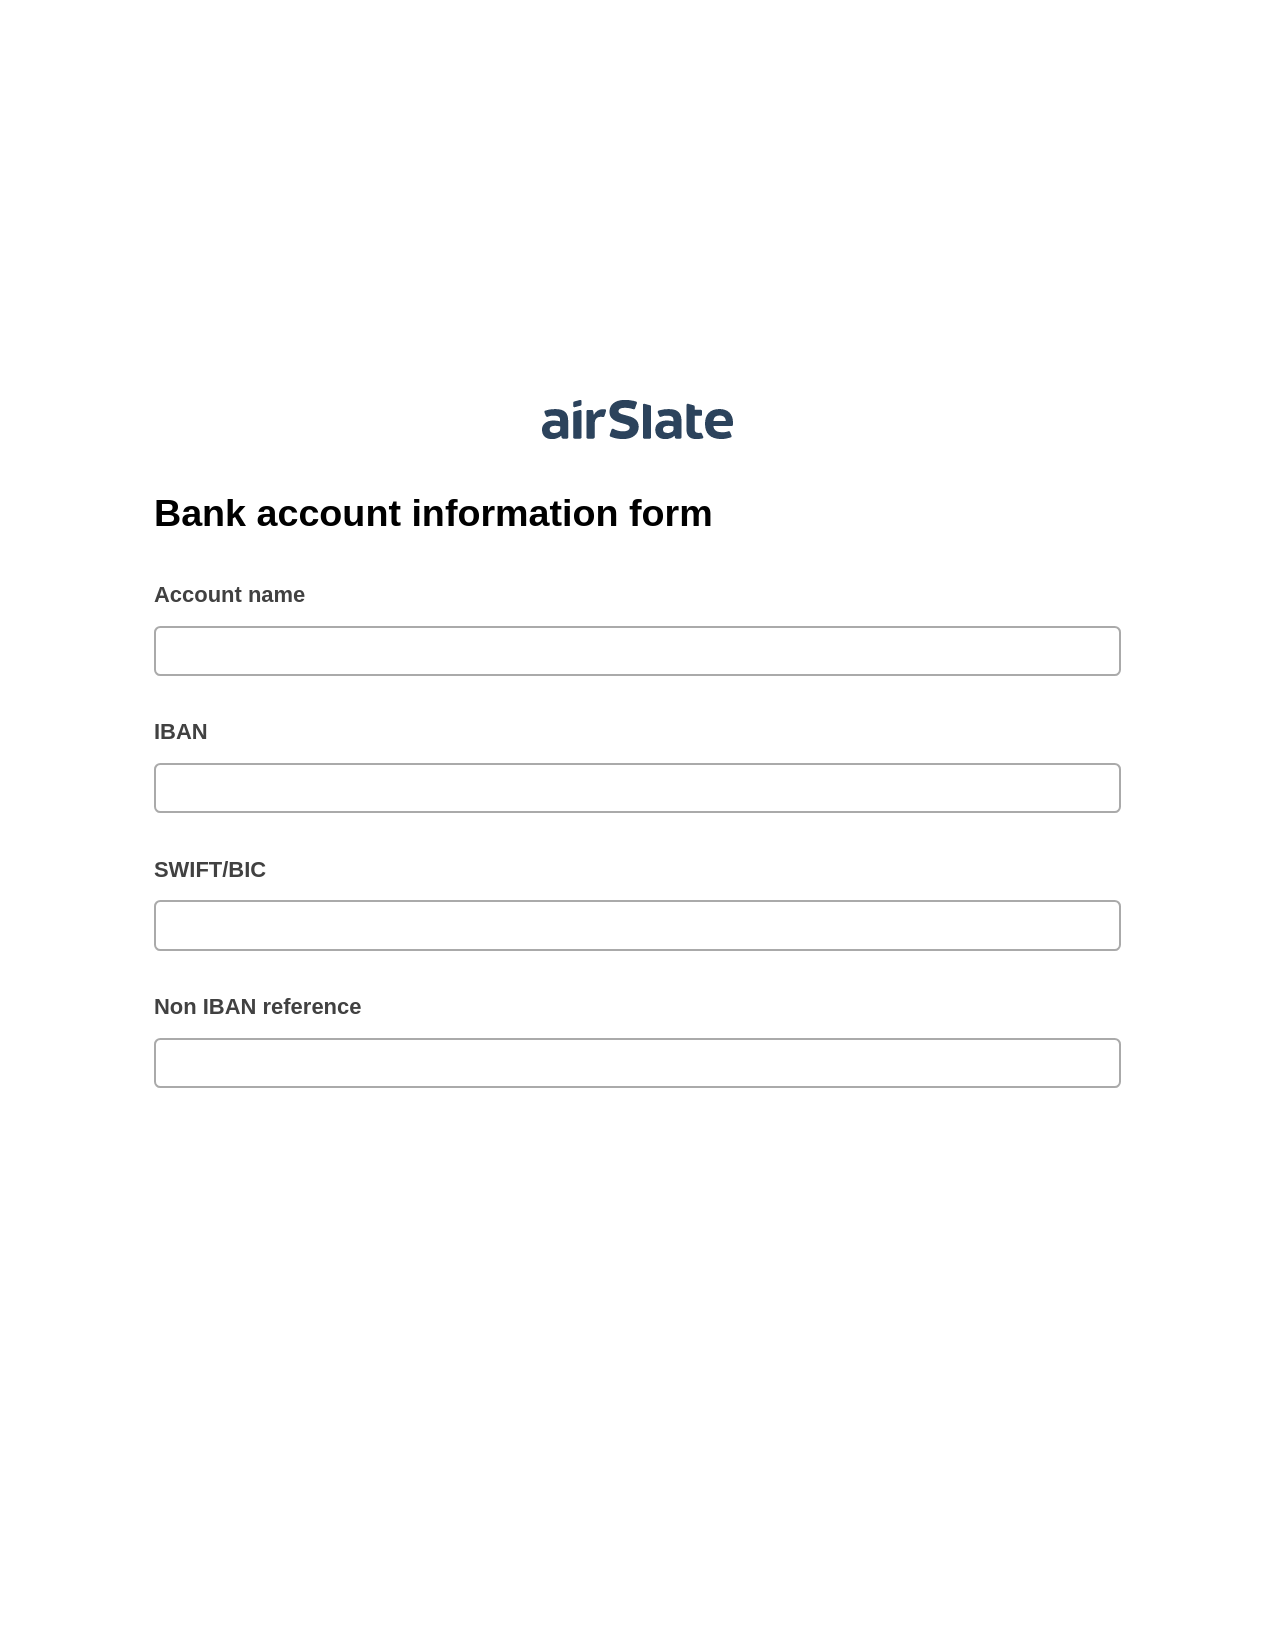 Multirole Bank account information form Pre-fill from Google Sheet Dropdown Options Bot, Slack Notification Bot, Webhook Postfinish Bot